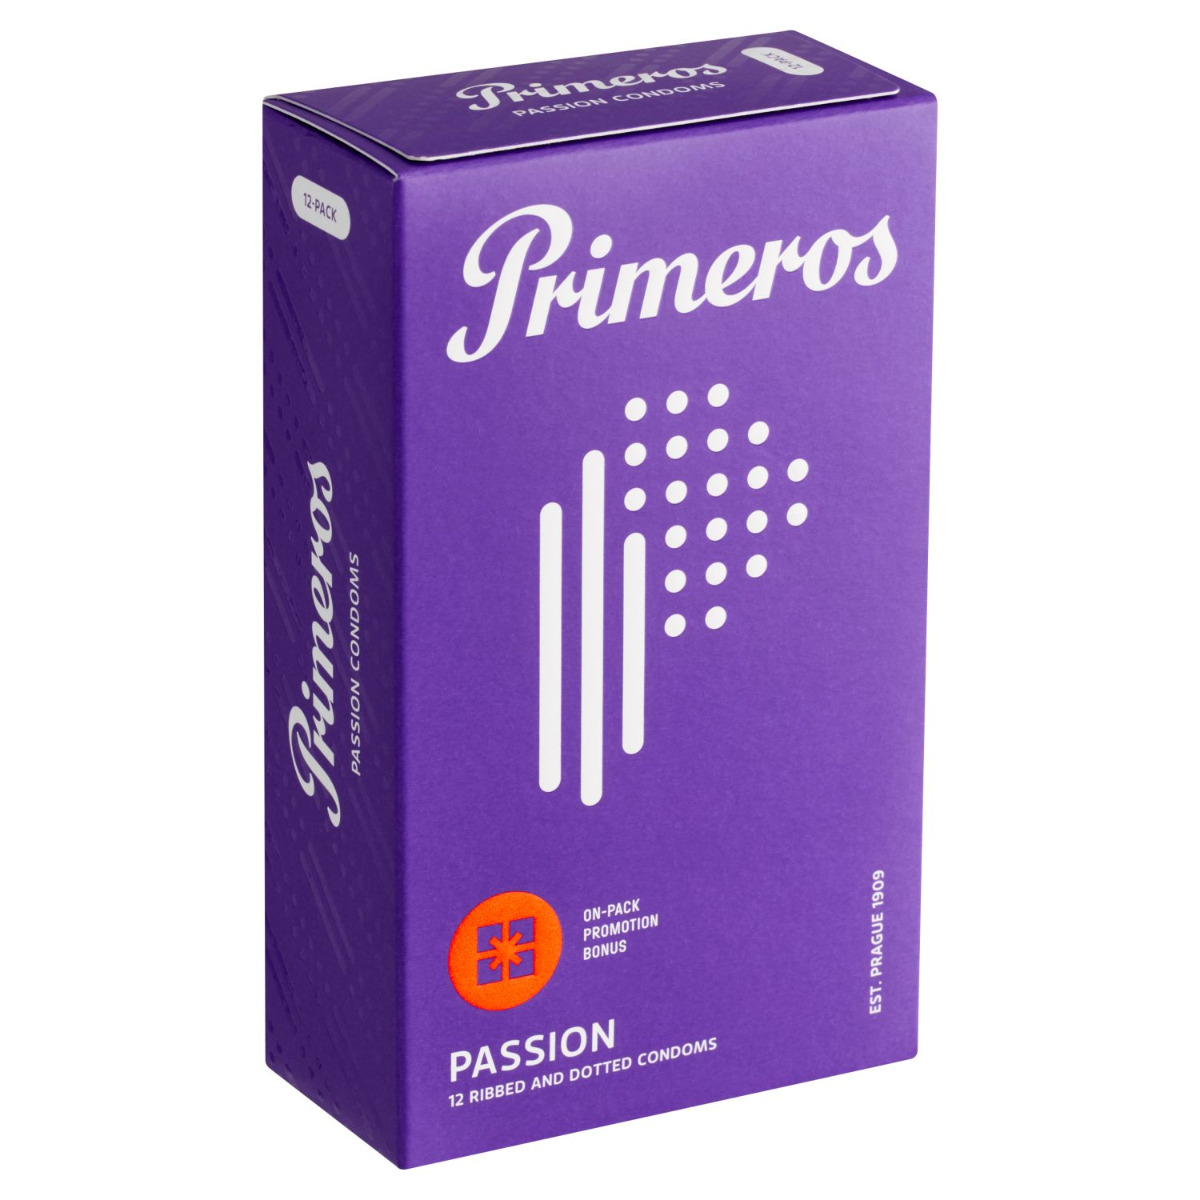 Primeros Passion kondomy s vroubky a výčnělky 12 ks Primeros